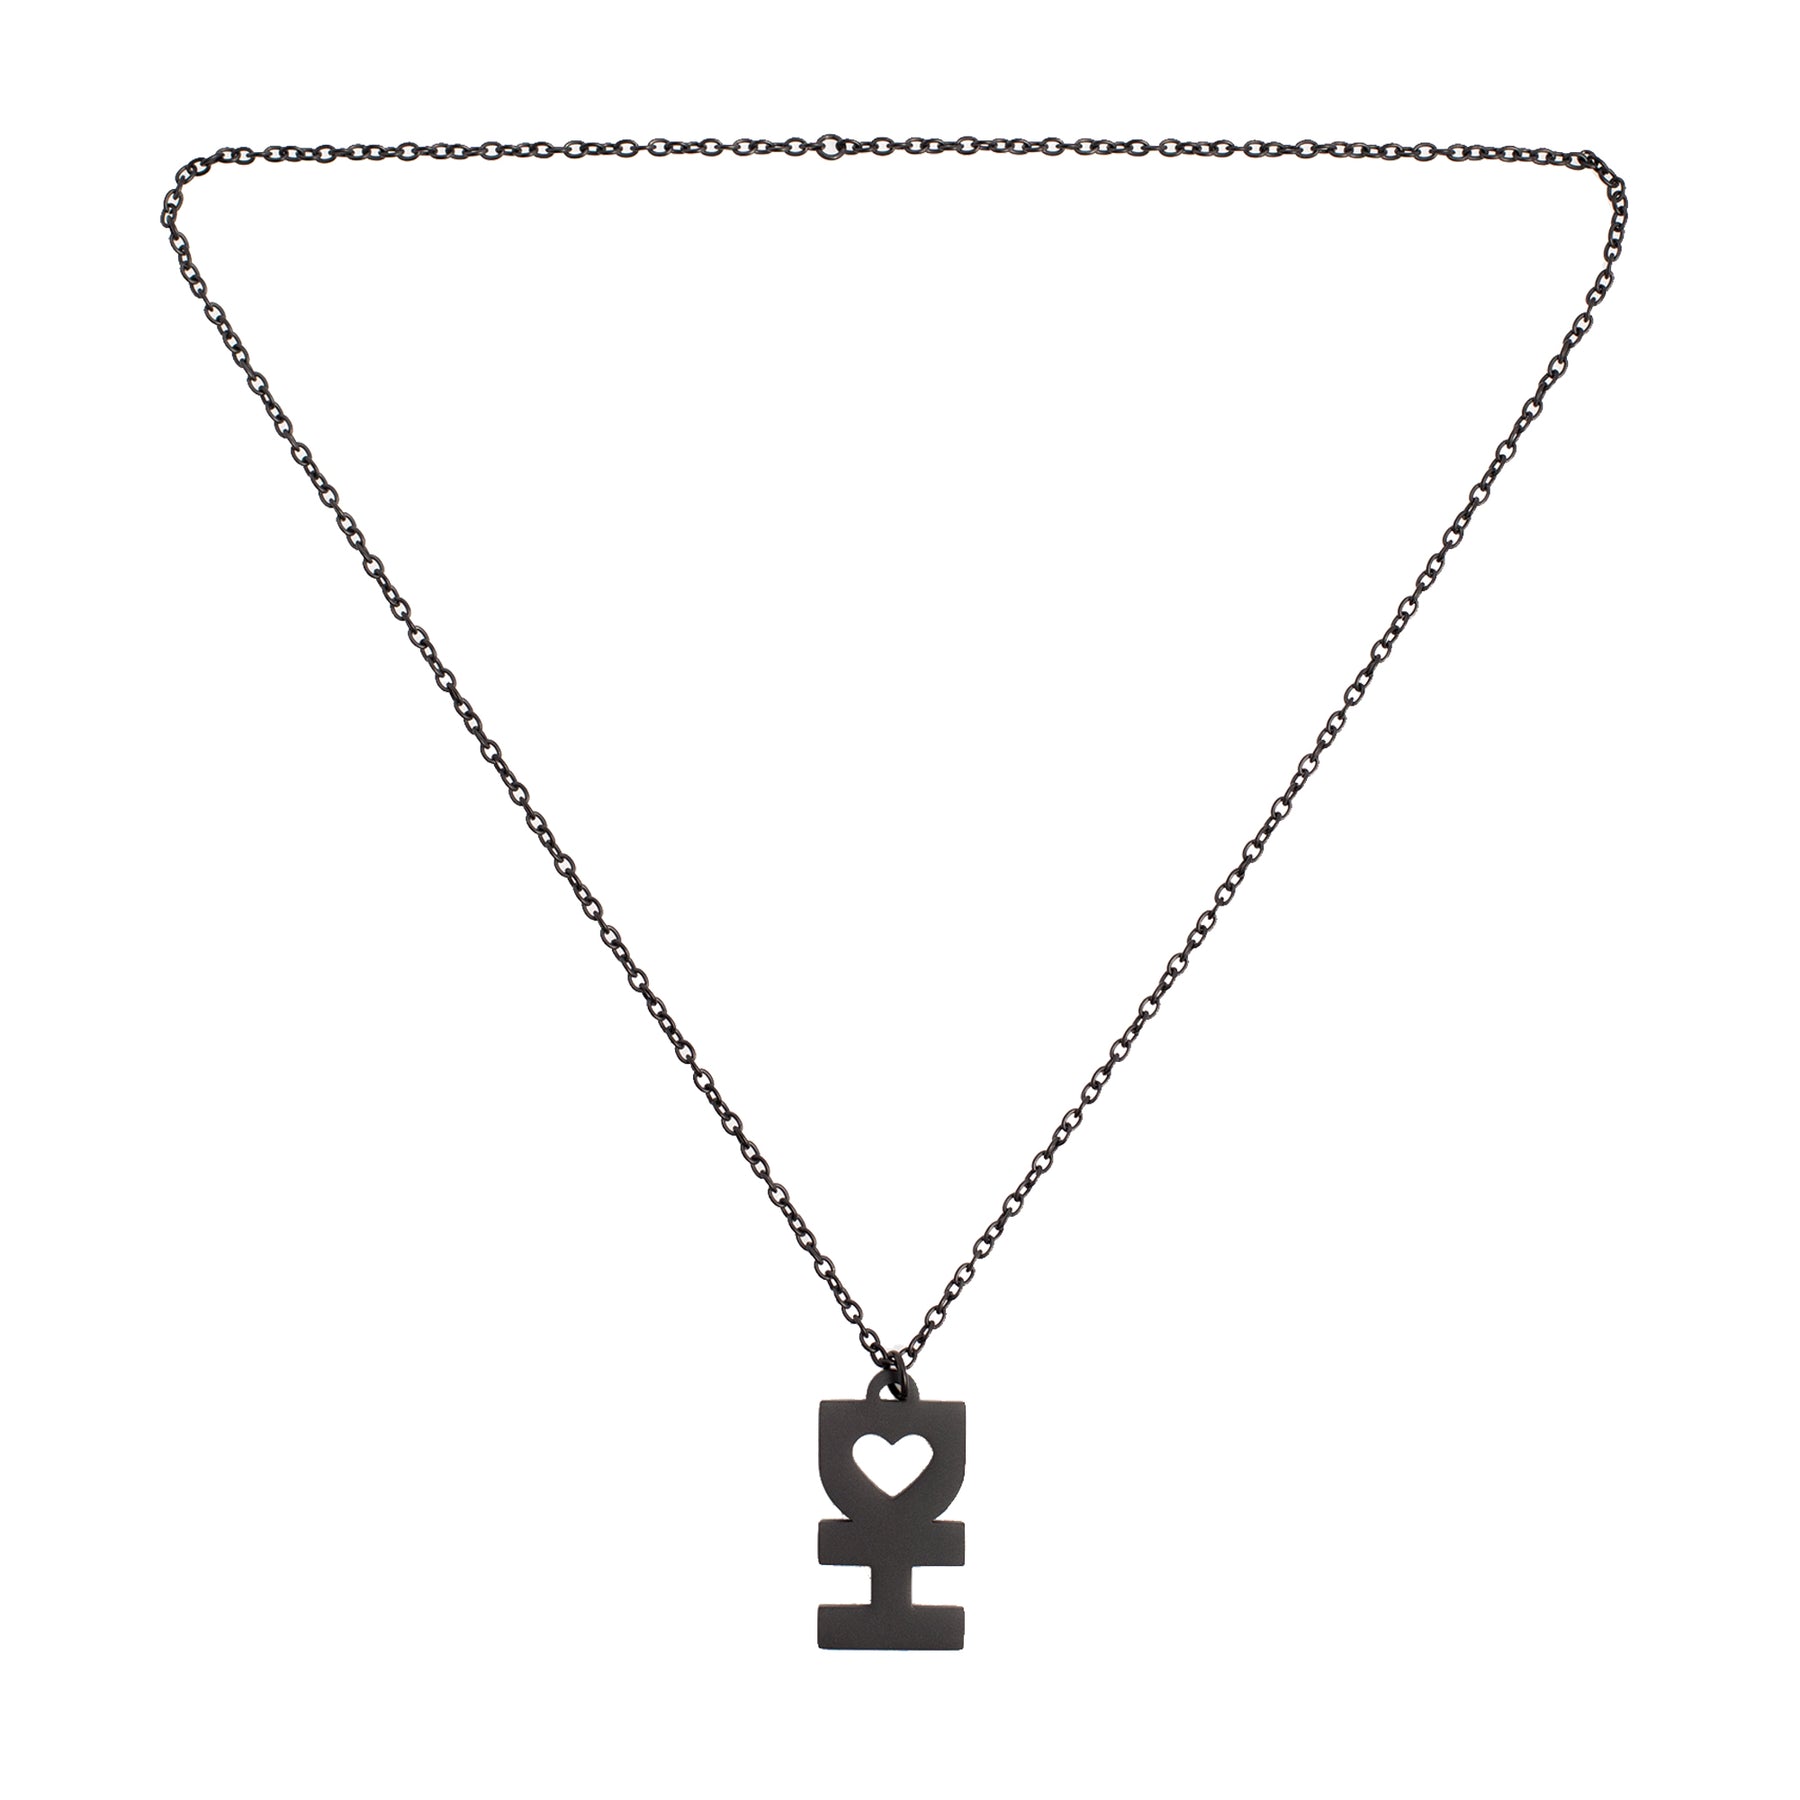 DH Flat Black Necklace